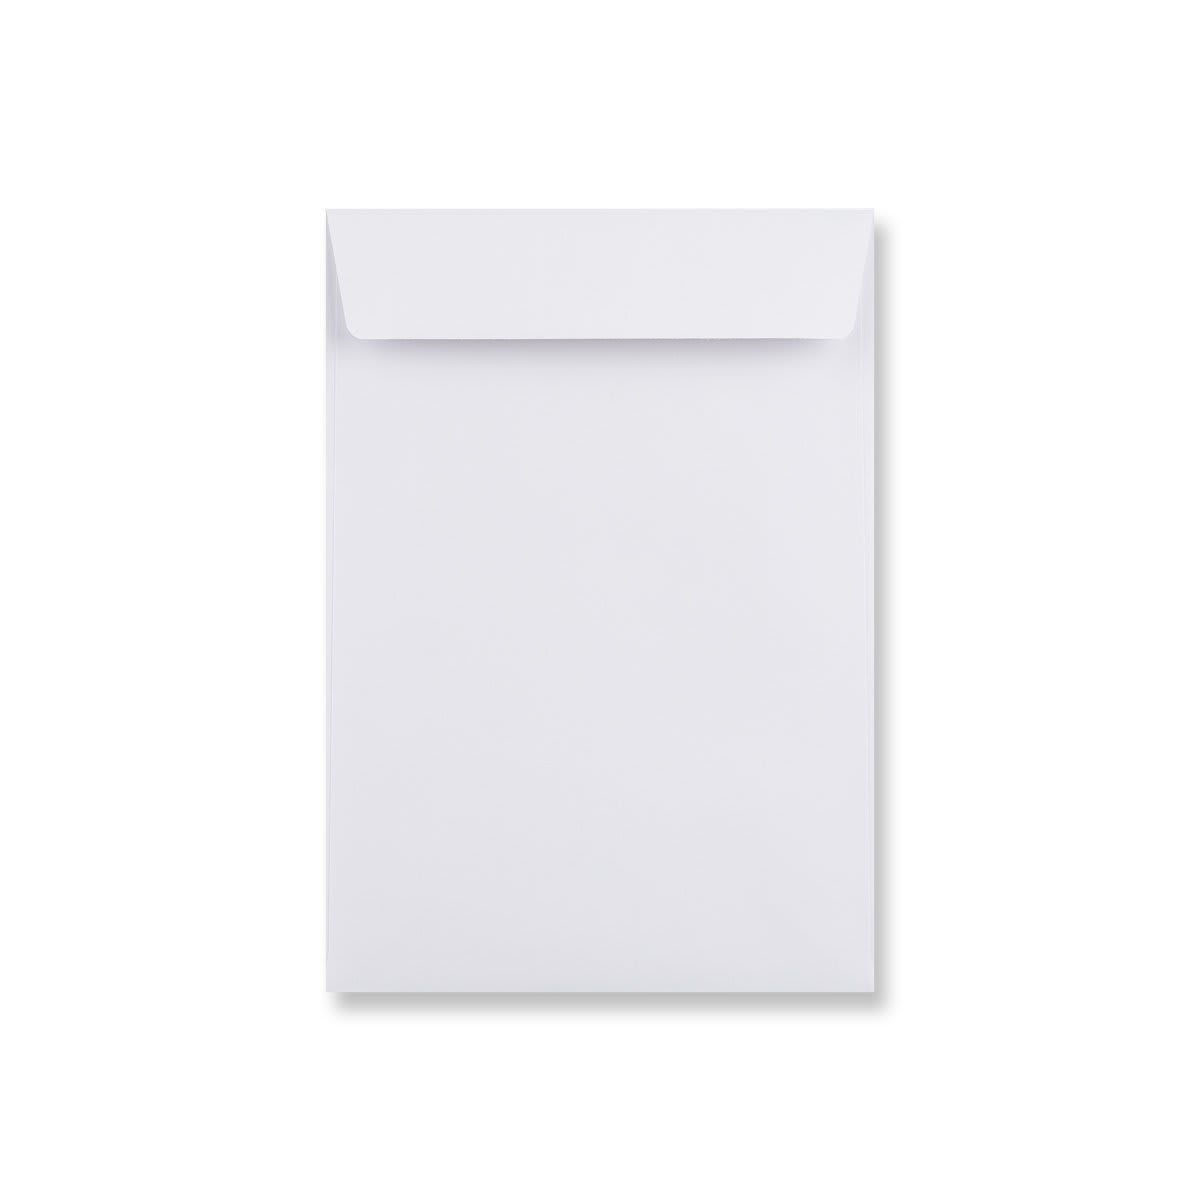 162x114mm C6 White Pocket Gummed 90gsm Non-opaque Envelopes